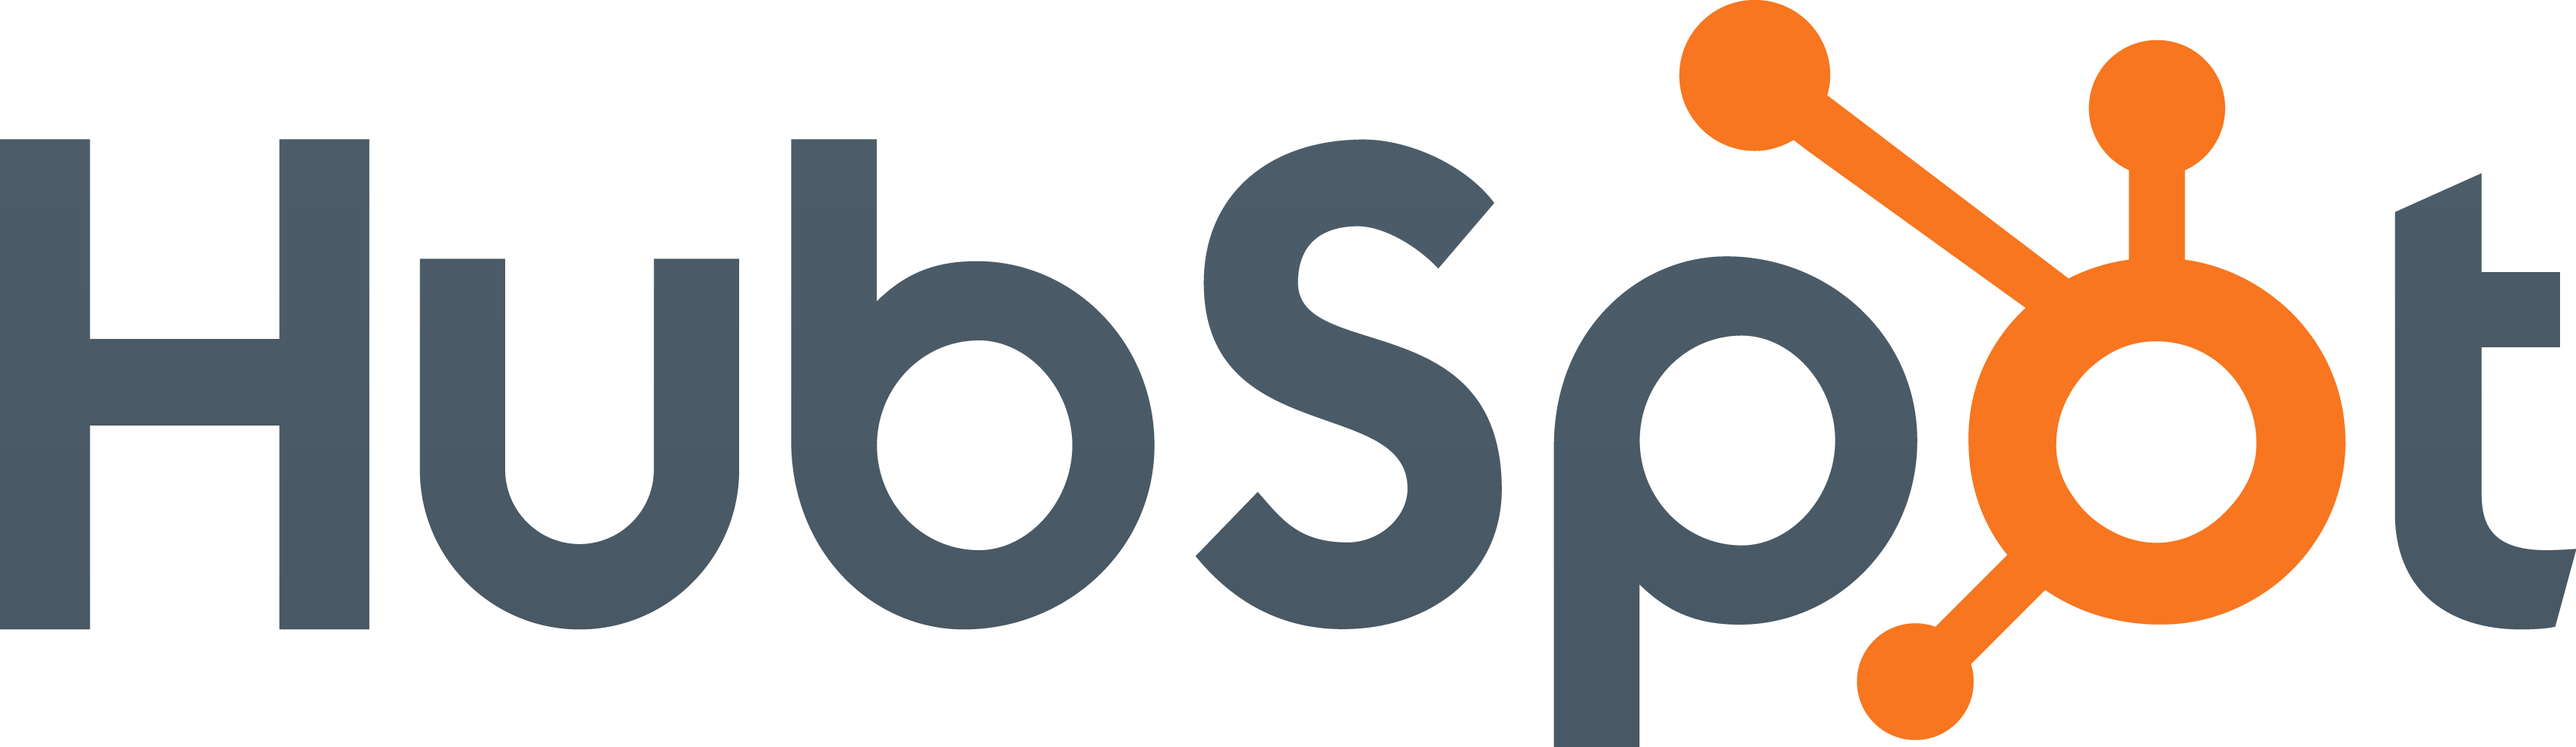 HubSpot_logo-9